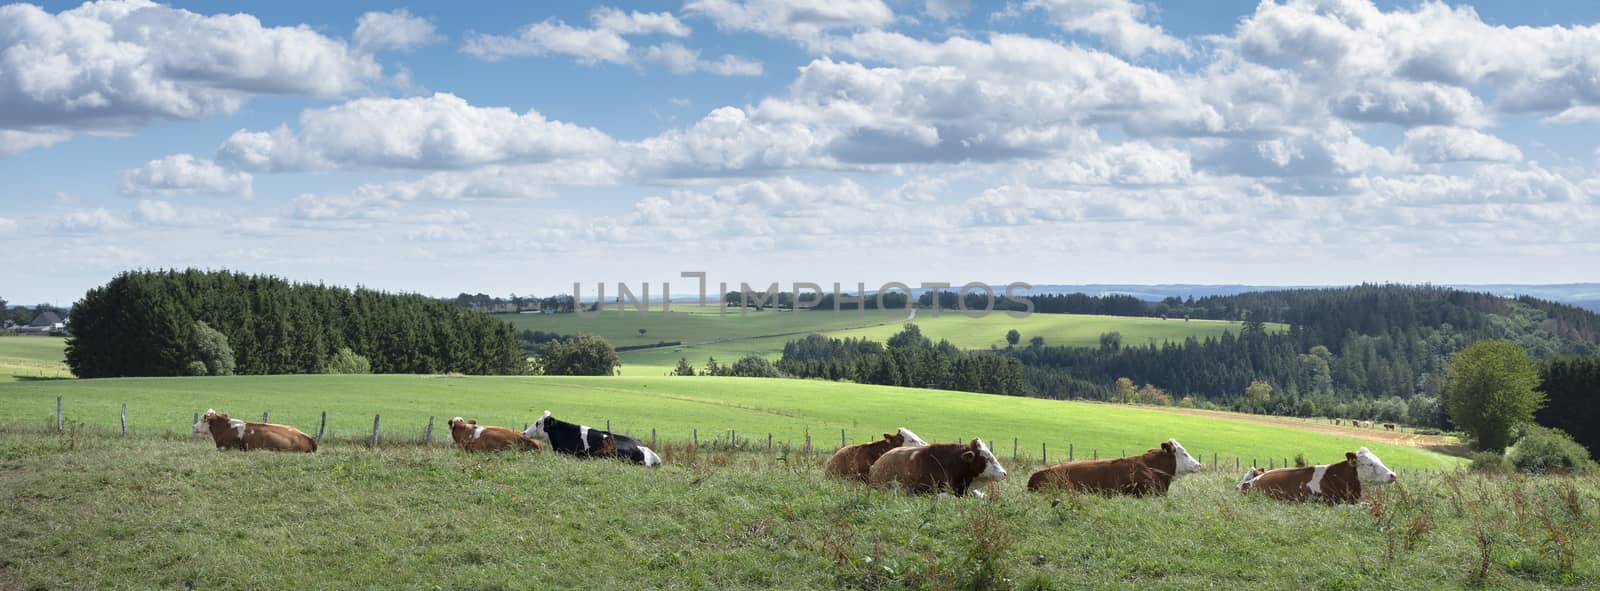 cows lie in meadow with countryside landscape of german eifel in the background by ahavelaar